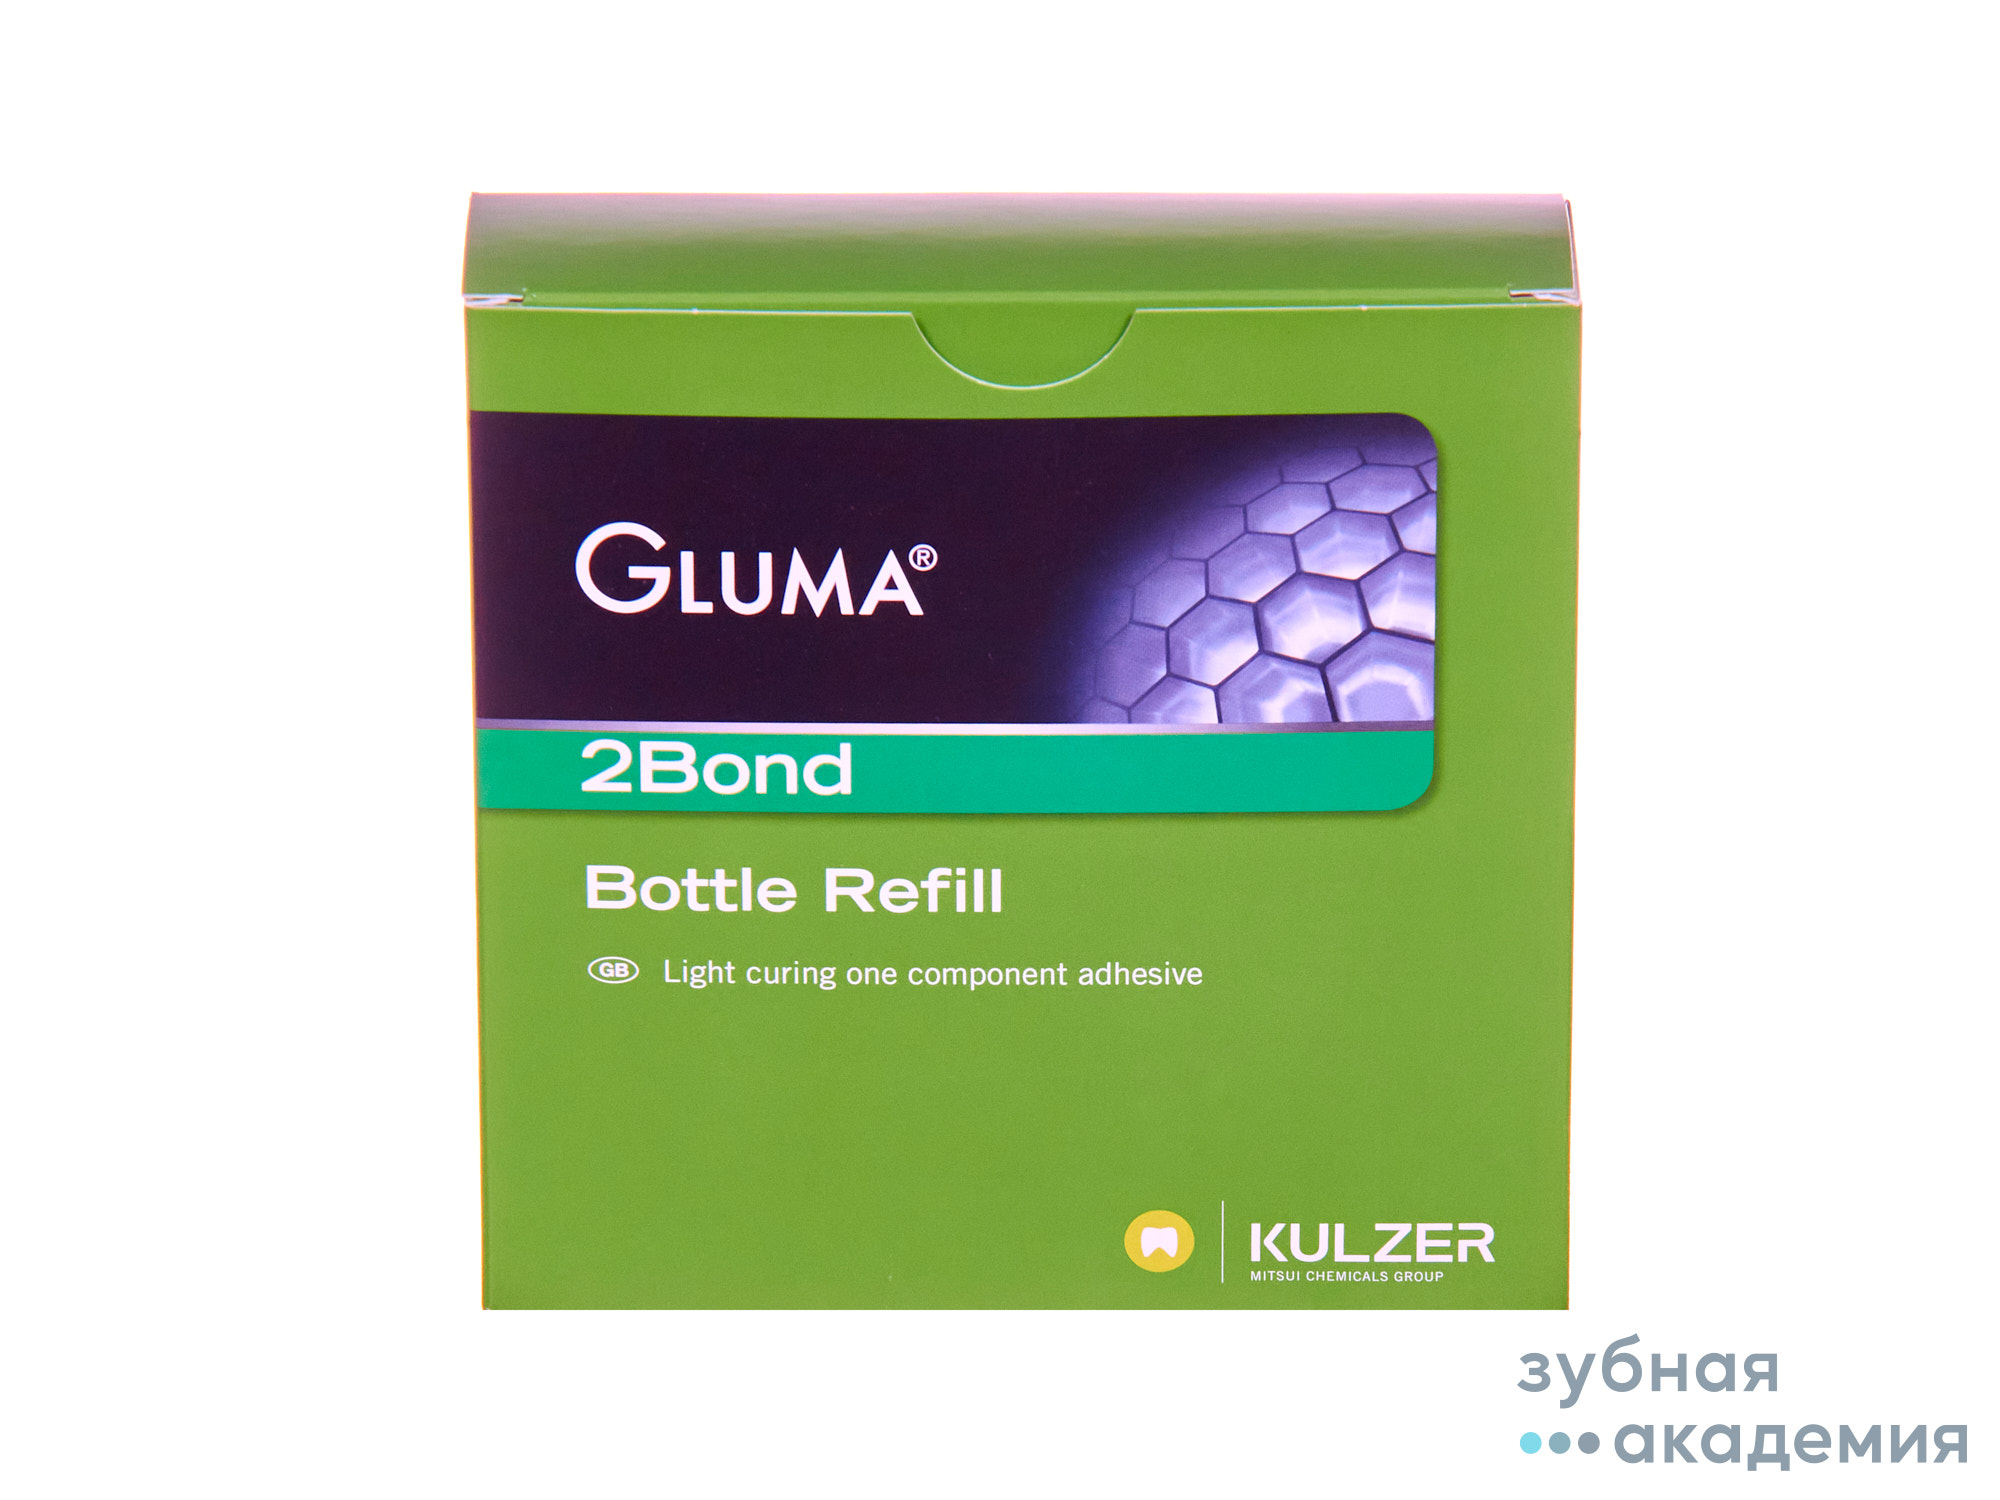 Адгезив Gluma 2Bond Bottle Refill / Глума 2Бонд Ботл Рефил (4 мл) Kulzer GmbH/ Германия